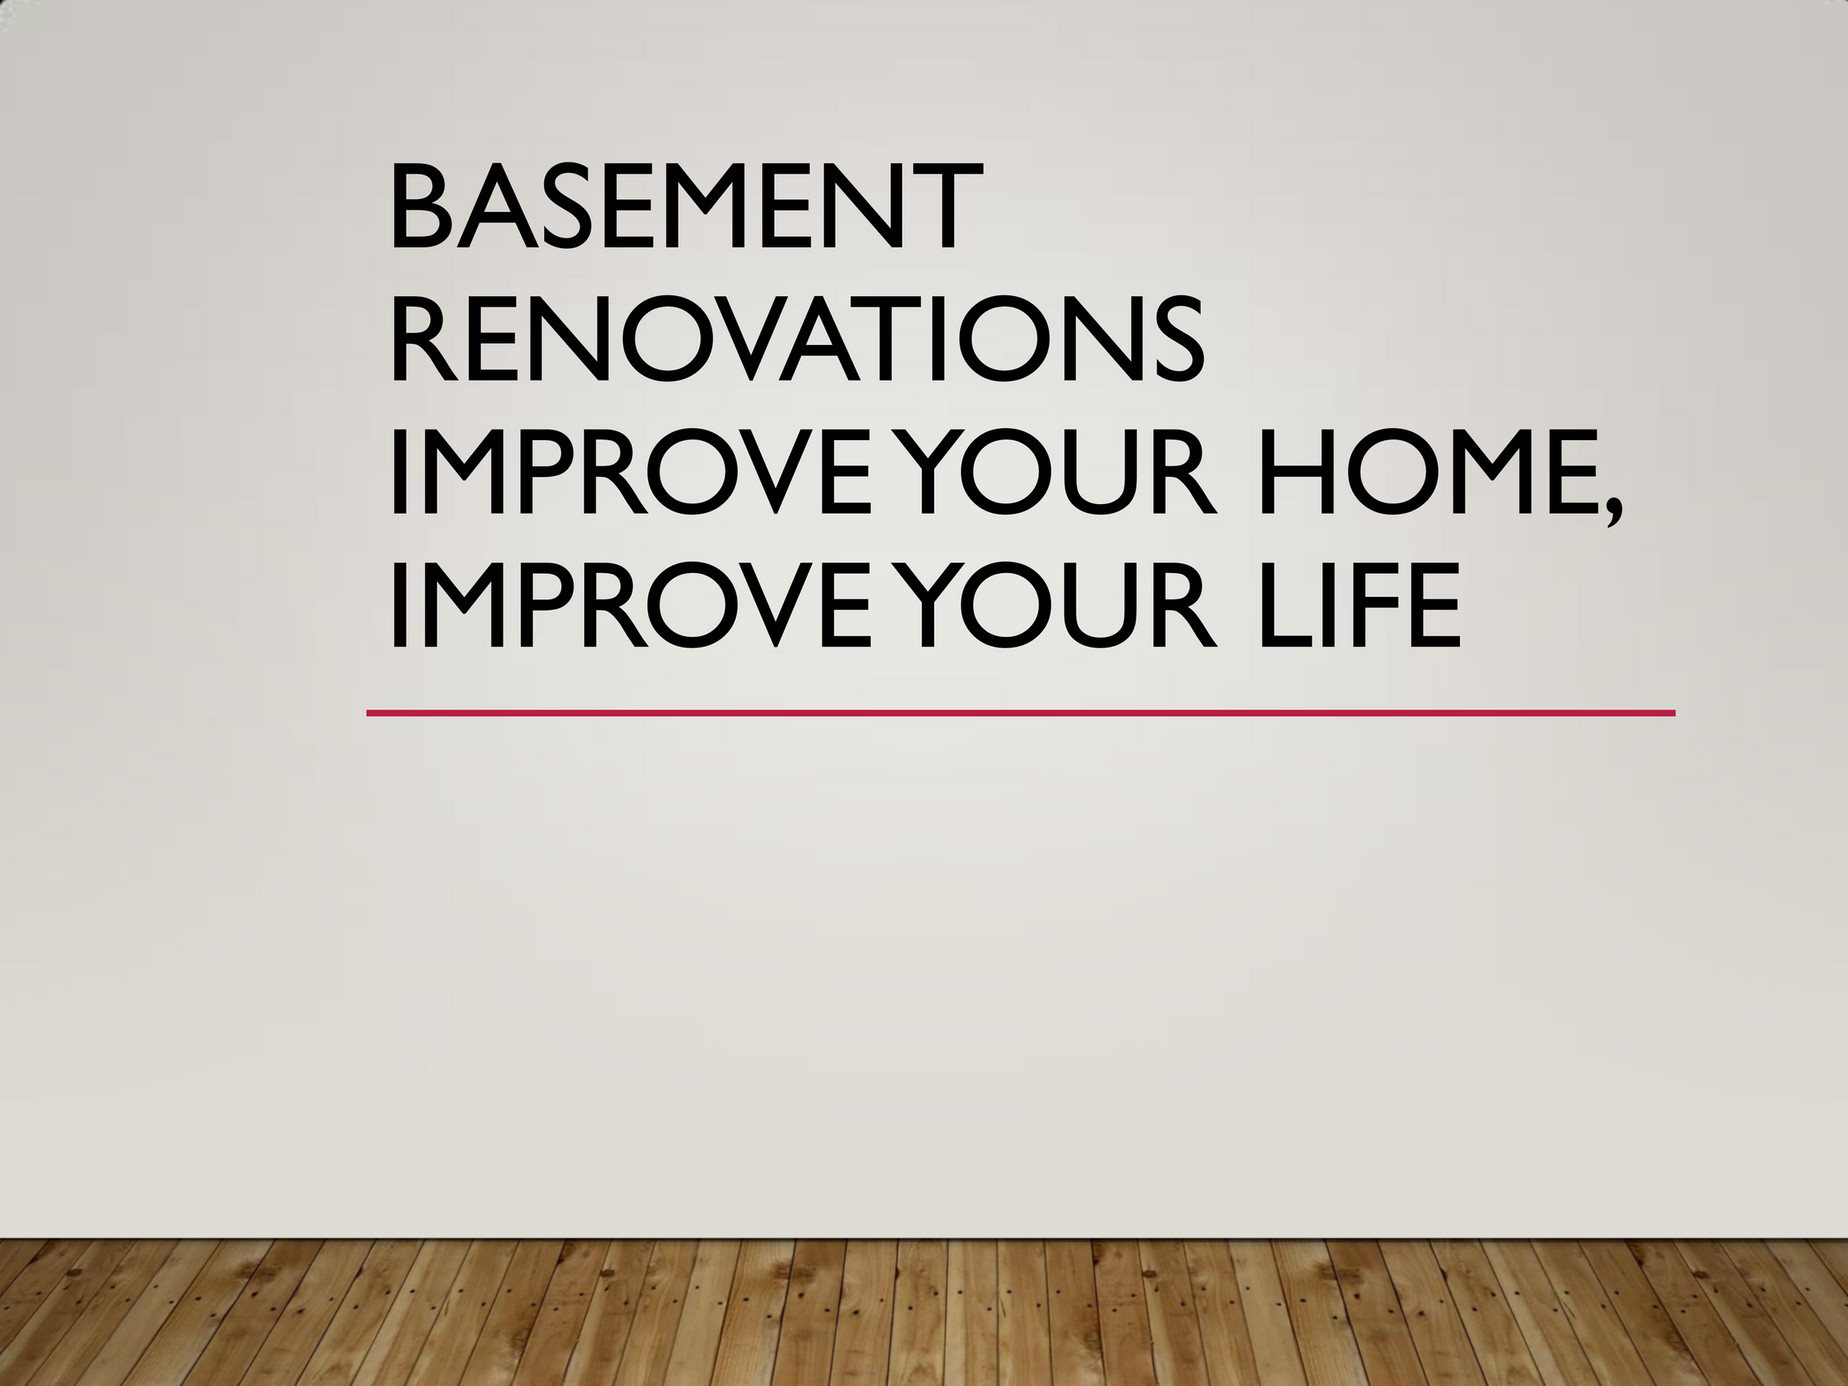 home-renovations-canada-basement-renovations-improve-your-home